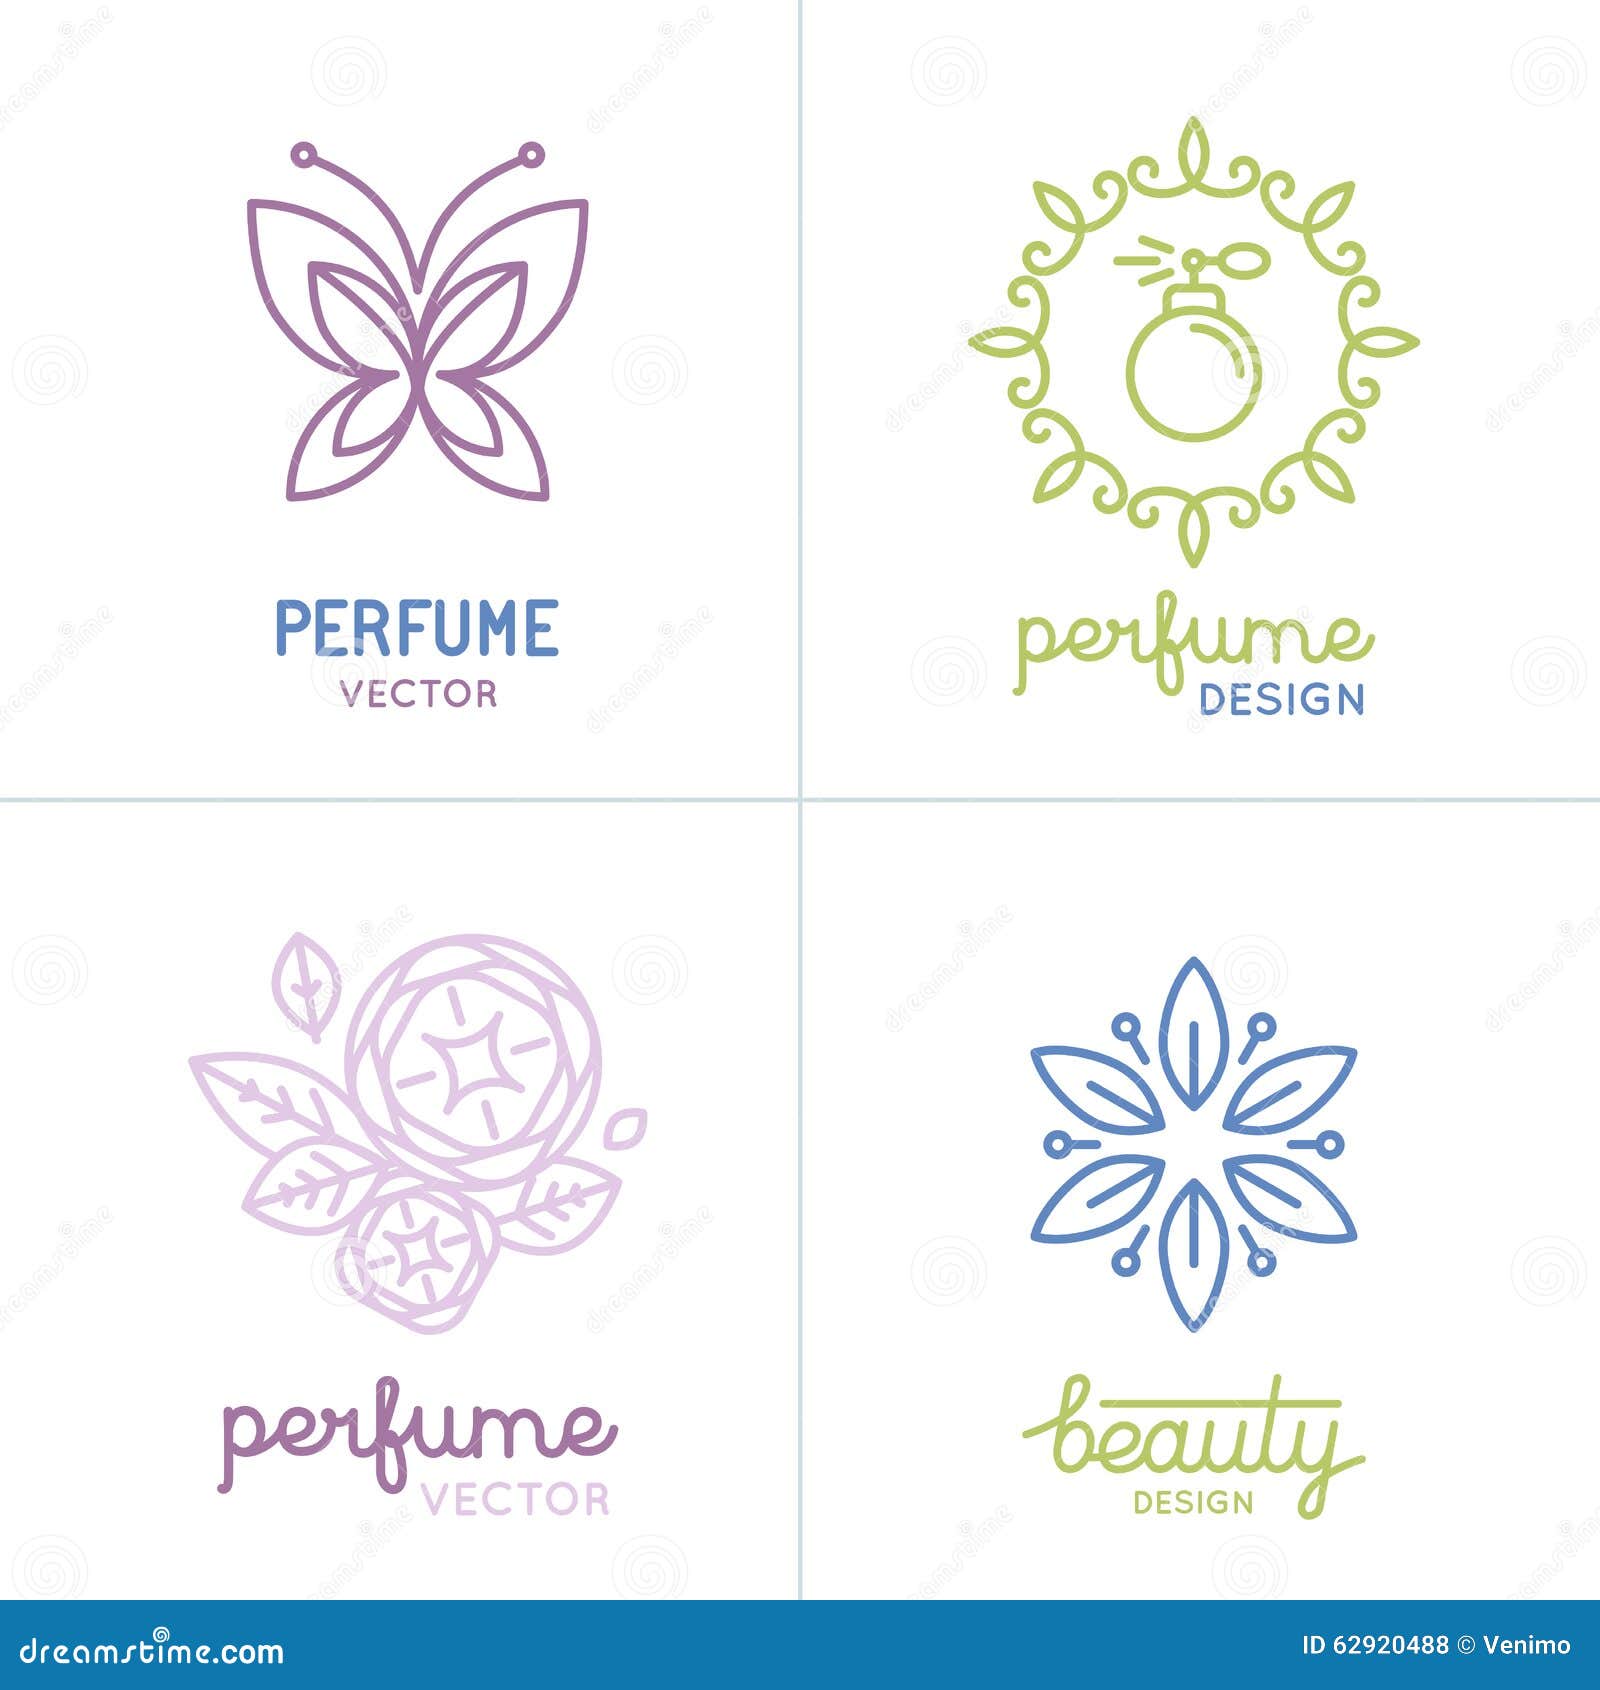 Free Vector, Luxury perfume logo collection concept